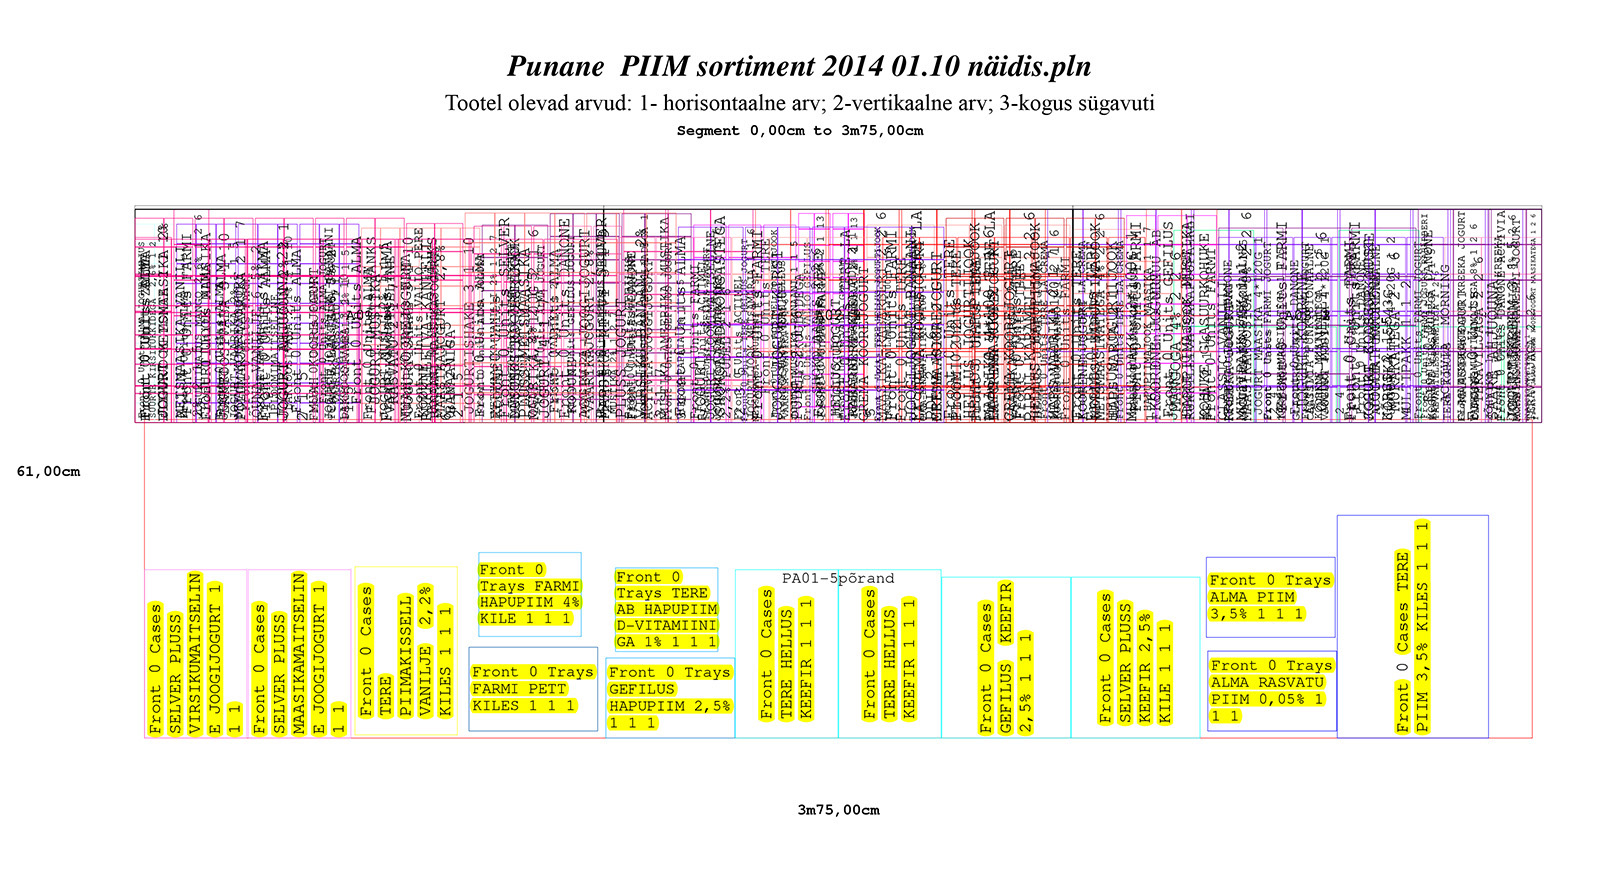 (Punane  PIIM sortiment 2014 01.10 n344idis.pln)